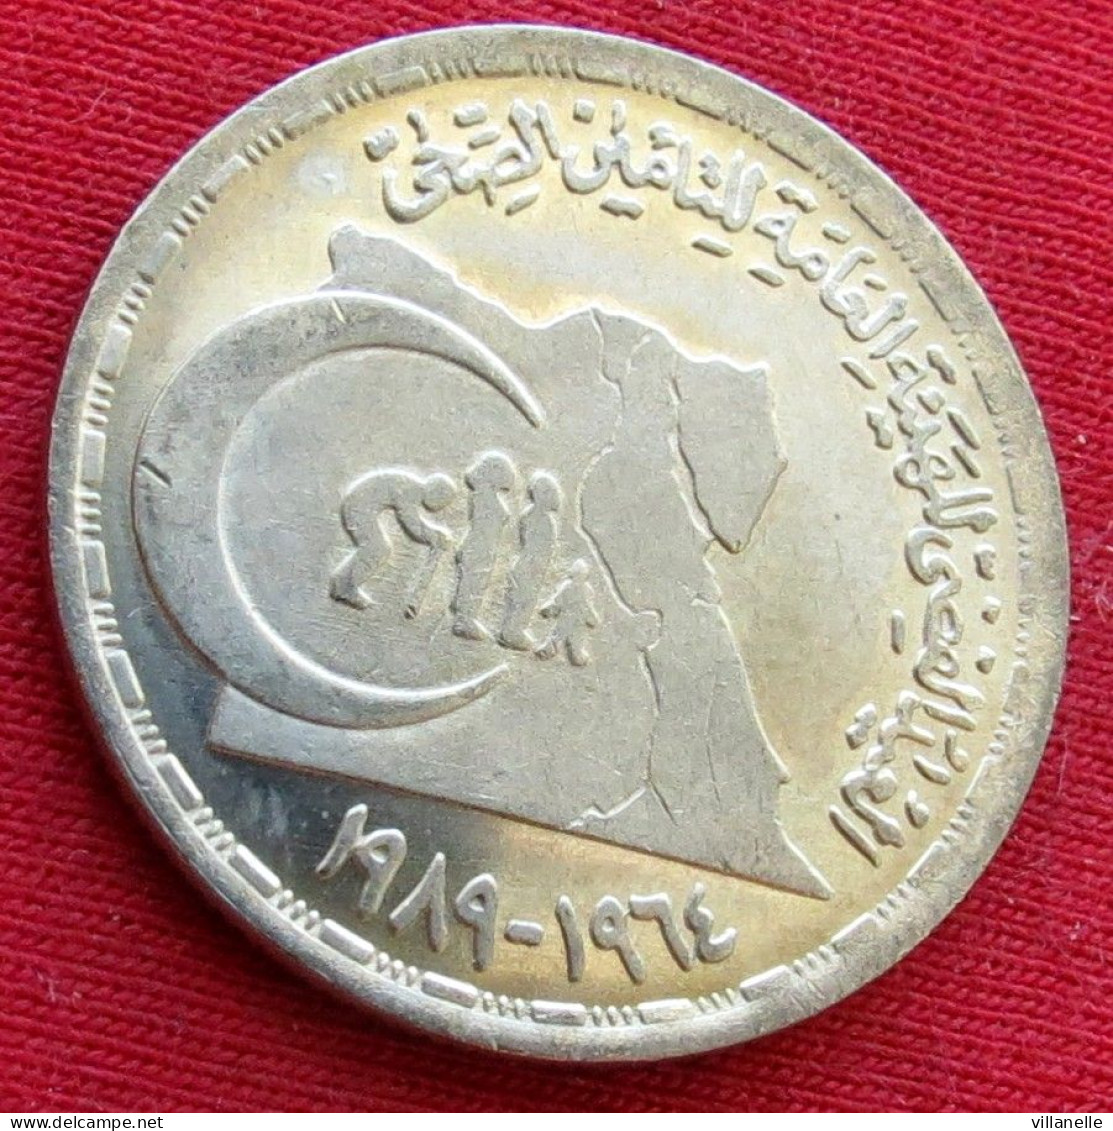 Egypt 20 Piastres 1989 Health Insurance Egipto Egypte Egito Egitto Ägypten UNC ºº - Aegypten